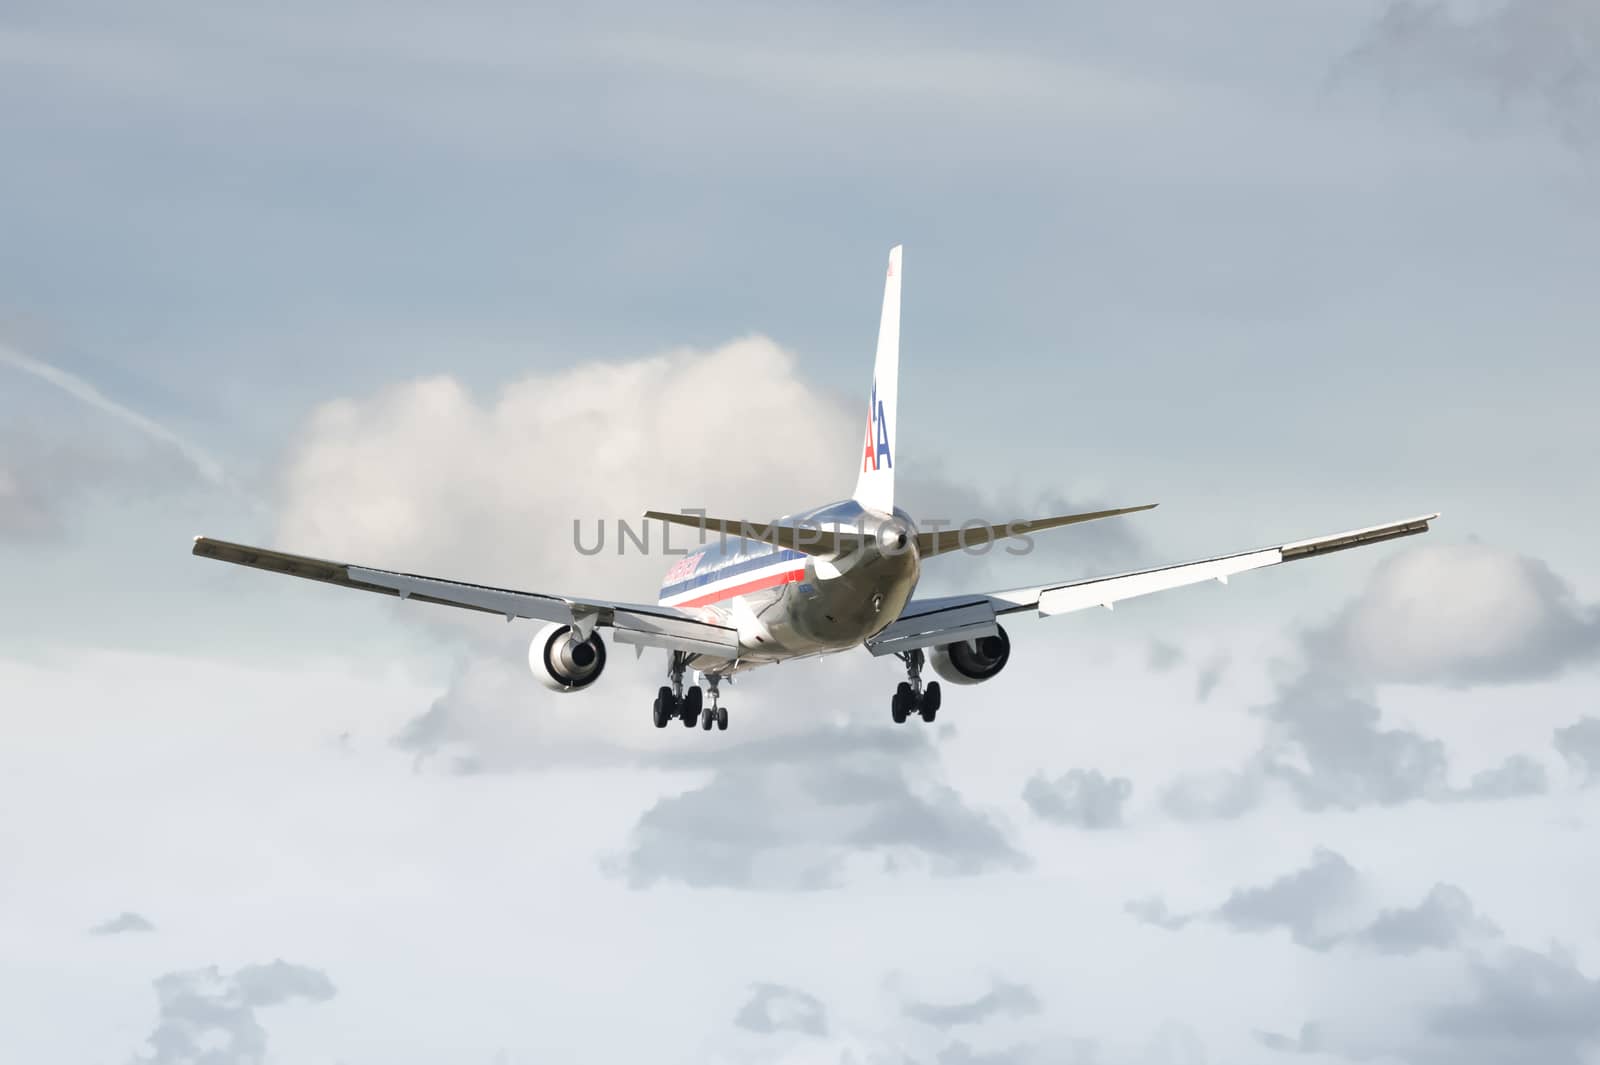 London, Heathrow, UK - October 30, 2012: American Airlines Boeing 767 on landing approach to London Heathrow Airport, UK